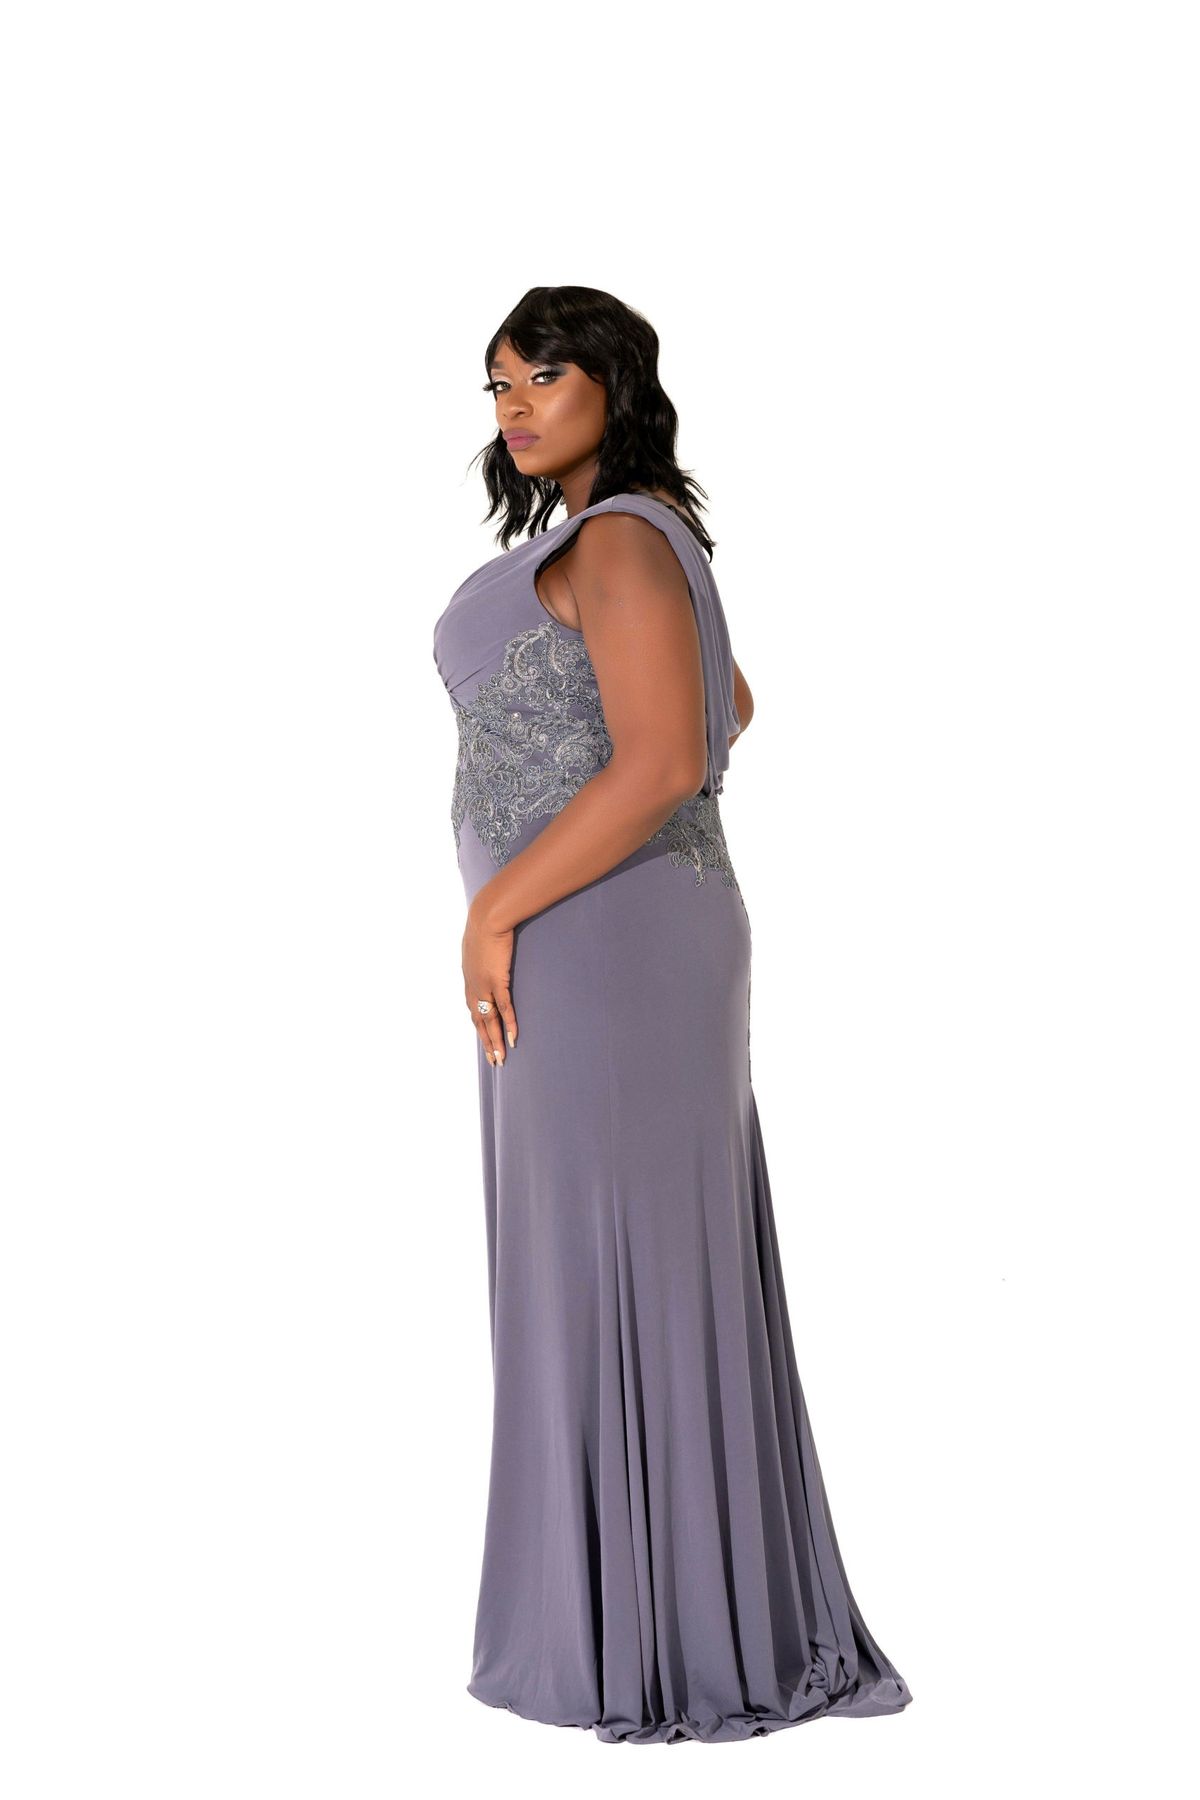 Style Luna Socialite Fashions Plus Size 18 Bridesmaid Purple Mermaid Dress on Queenly